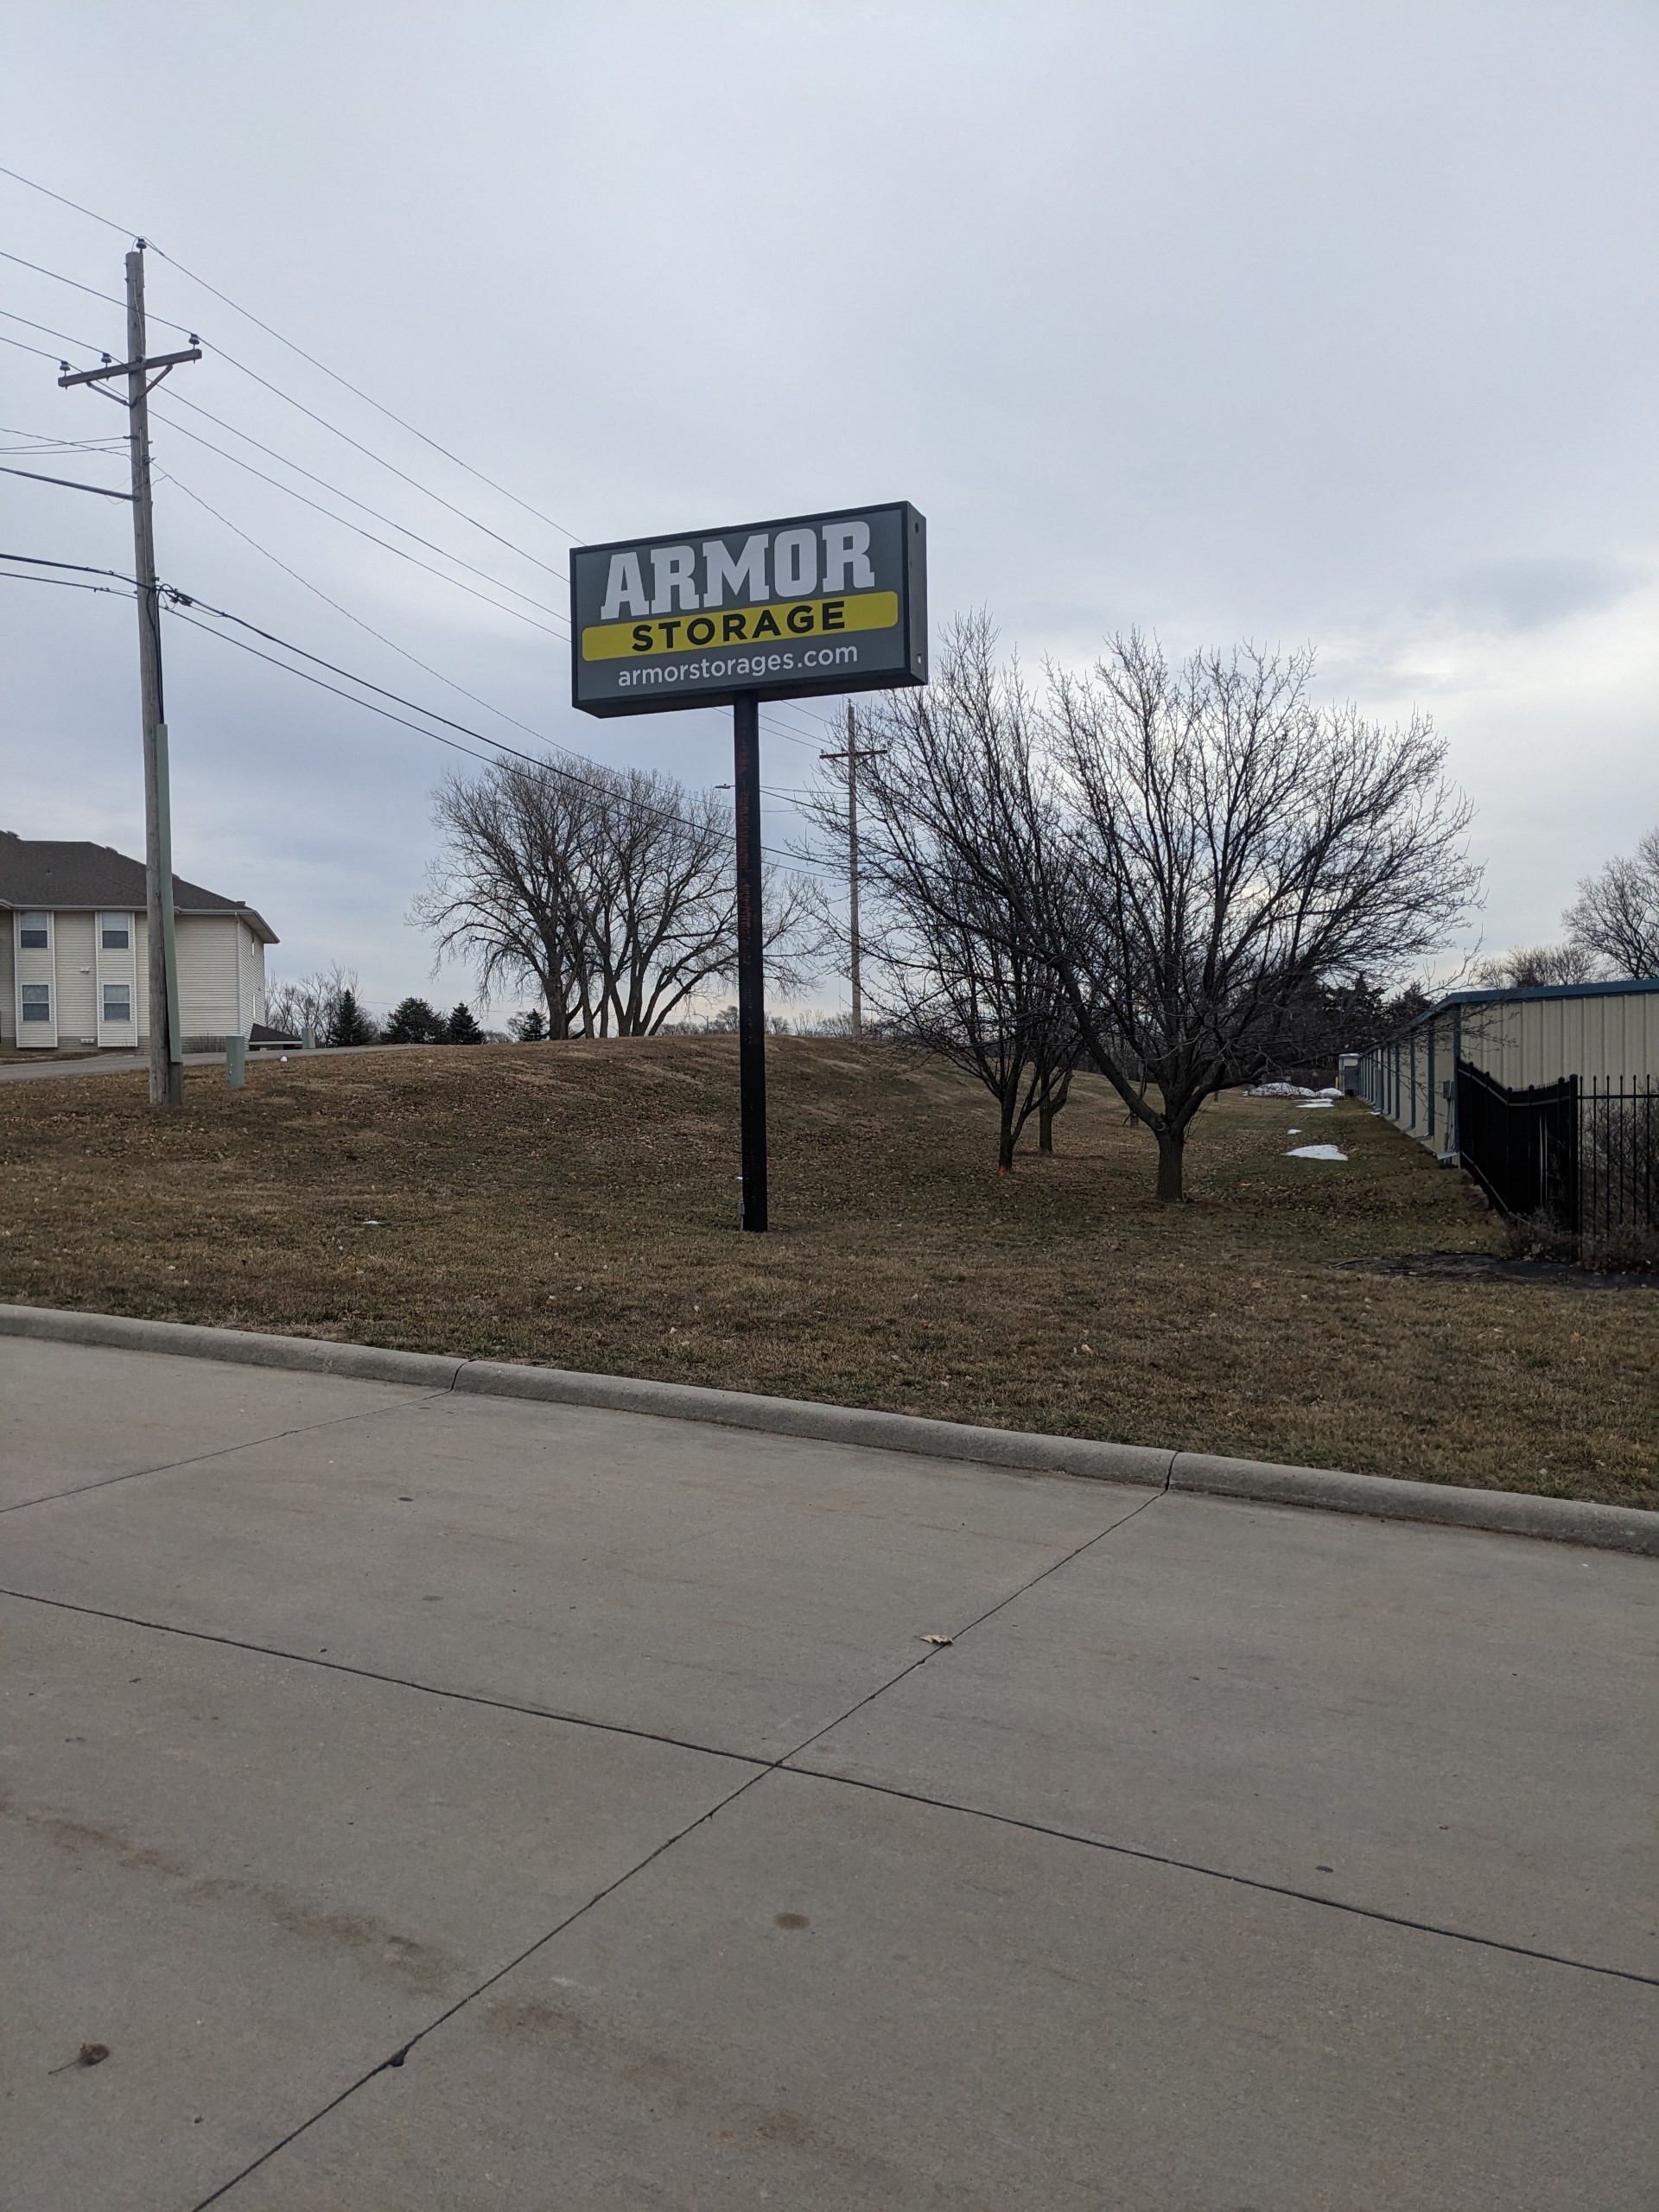 Armor Storage Sign in Omaha, NE